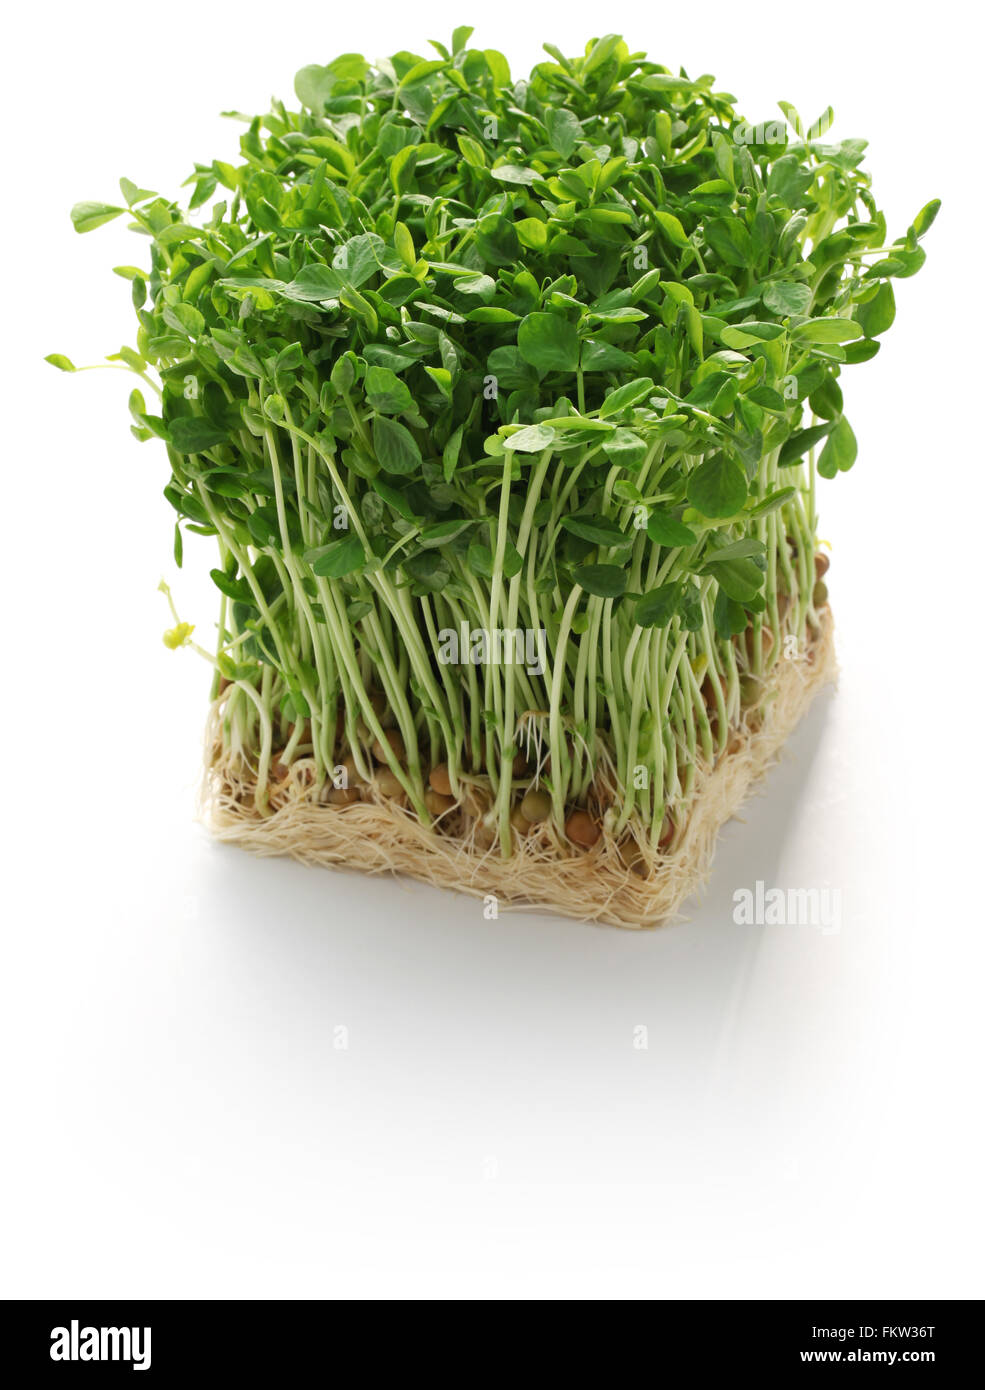 pea shoots, chinese vegetable isolated on white background Stock Photo